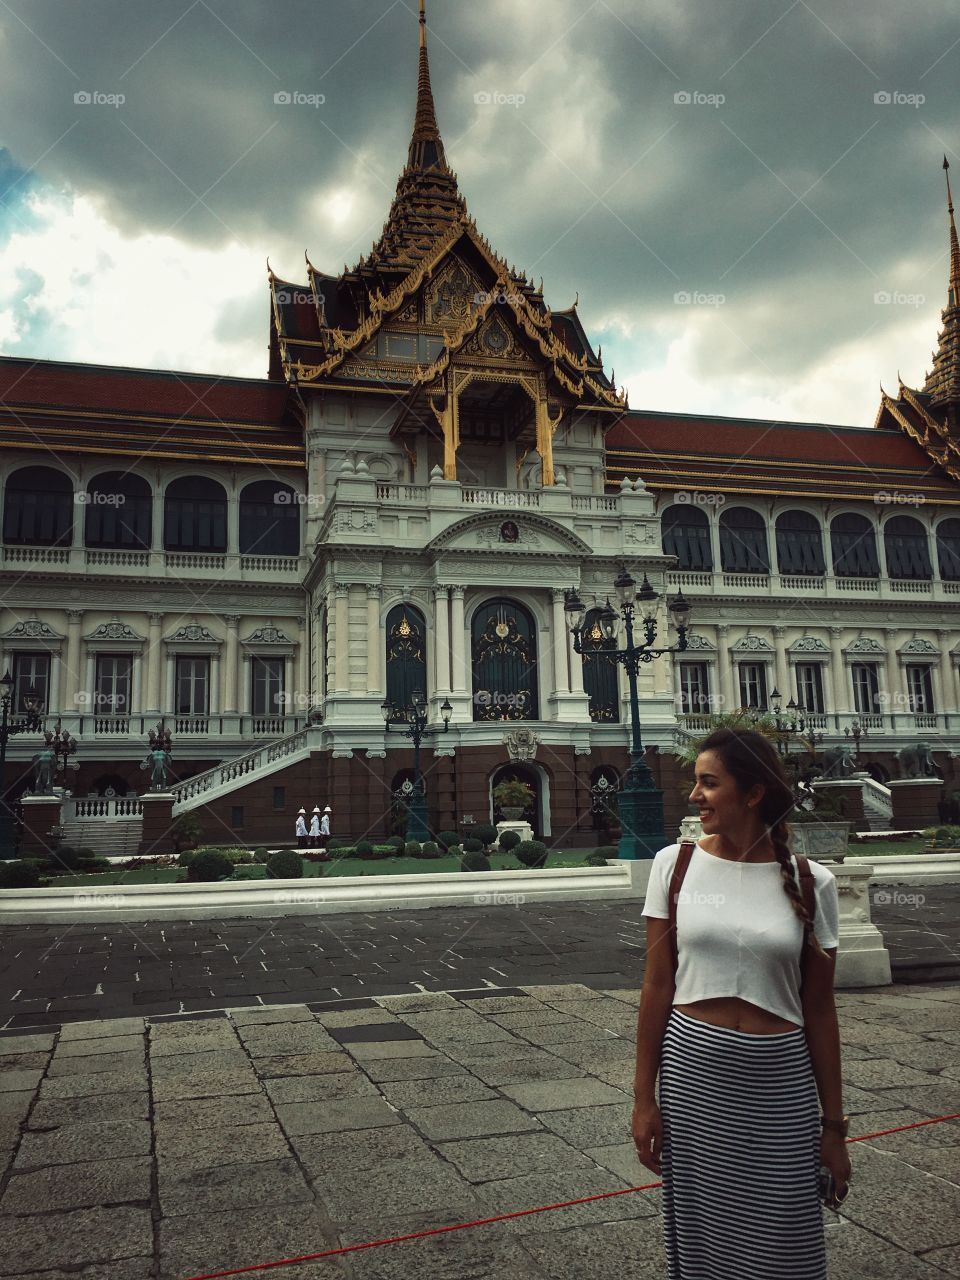 Thailand palace